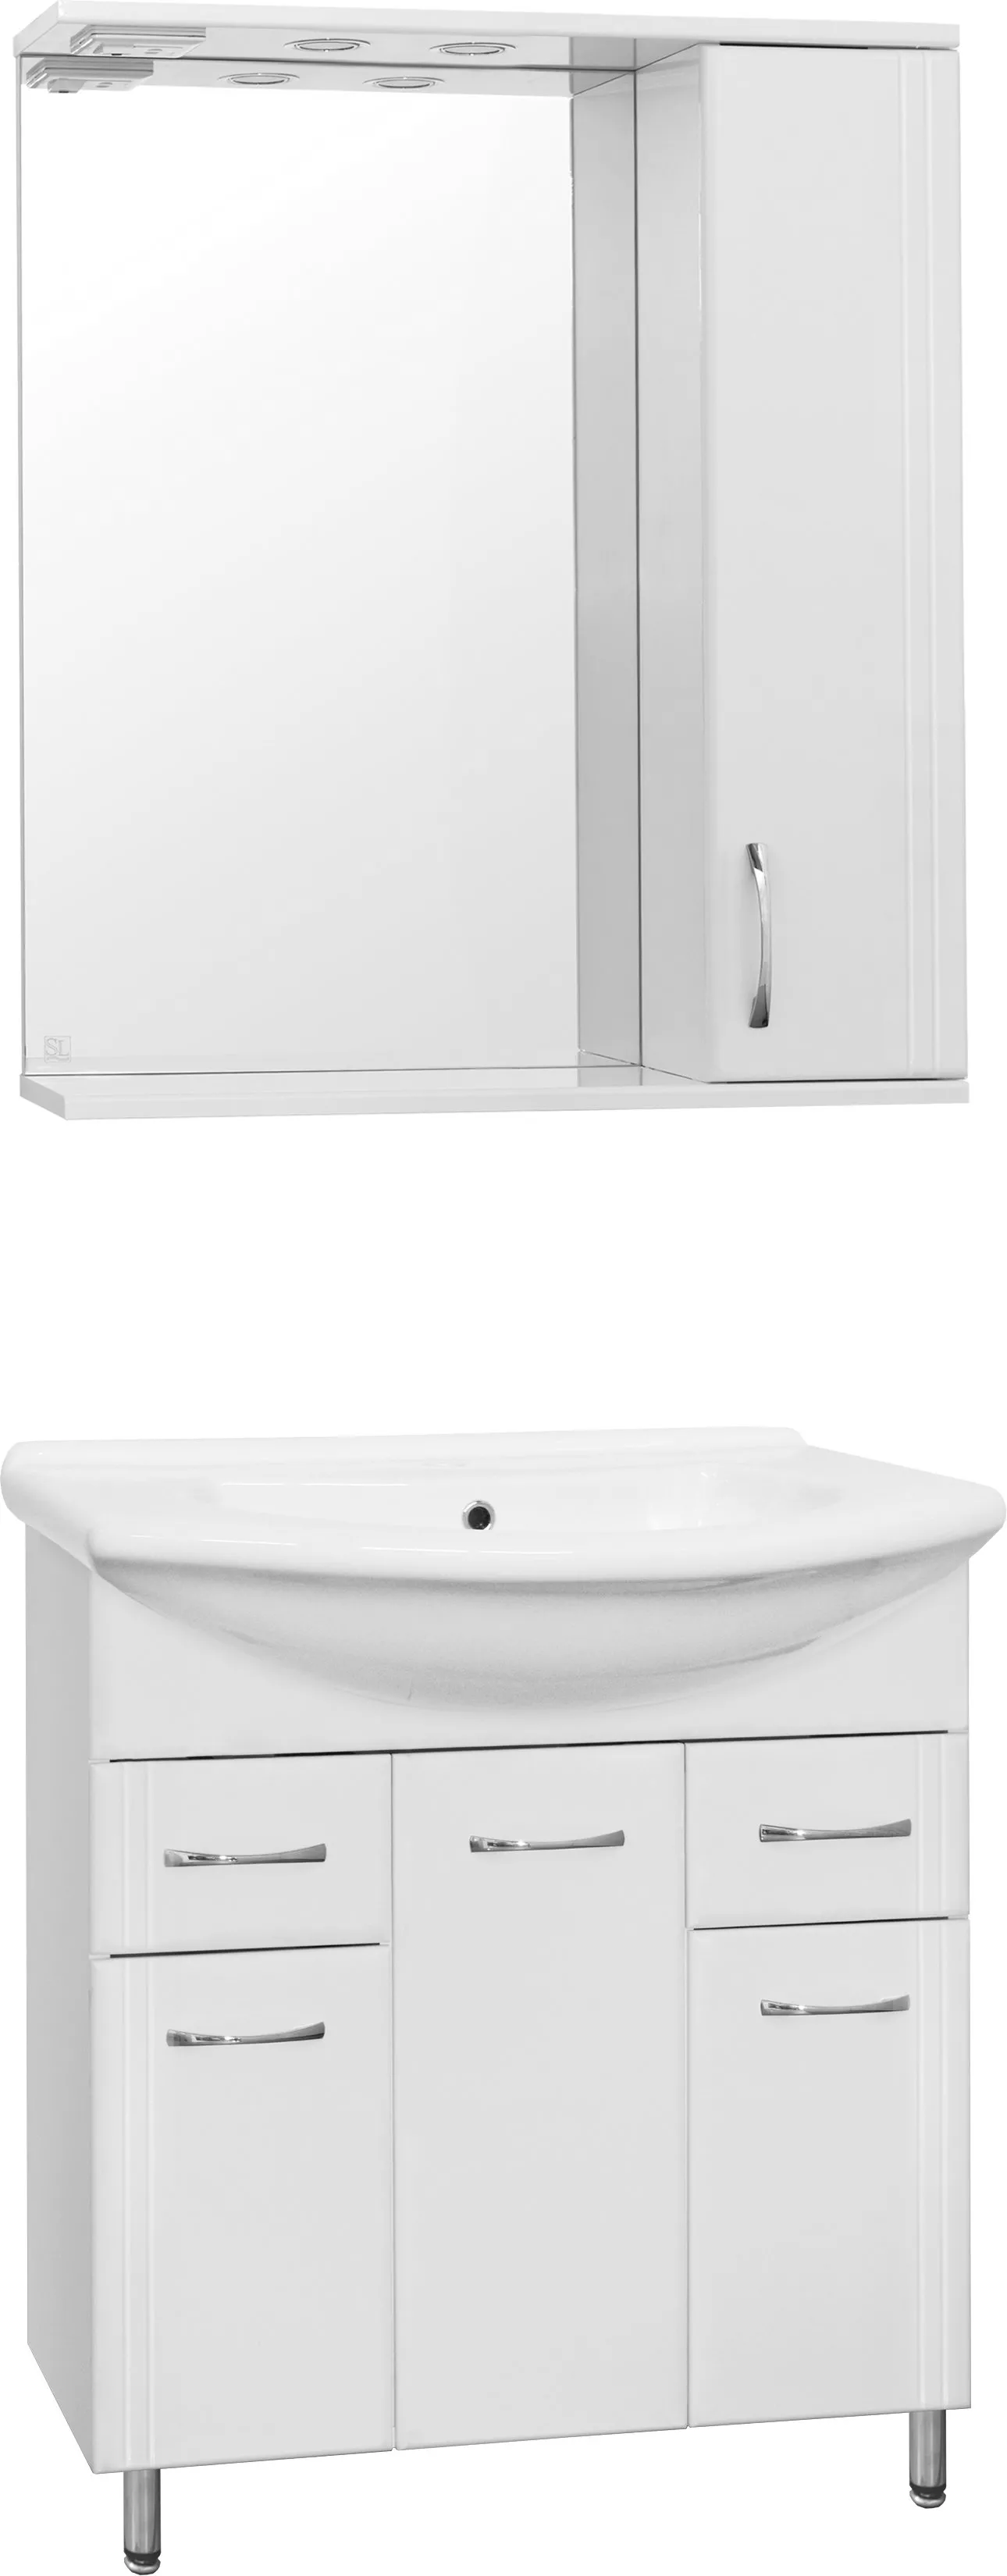 Мебель для ванной Style Line Эко Стандарт №26 75 белая, размер 75.5, цвет белый - фото 1